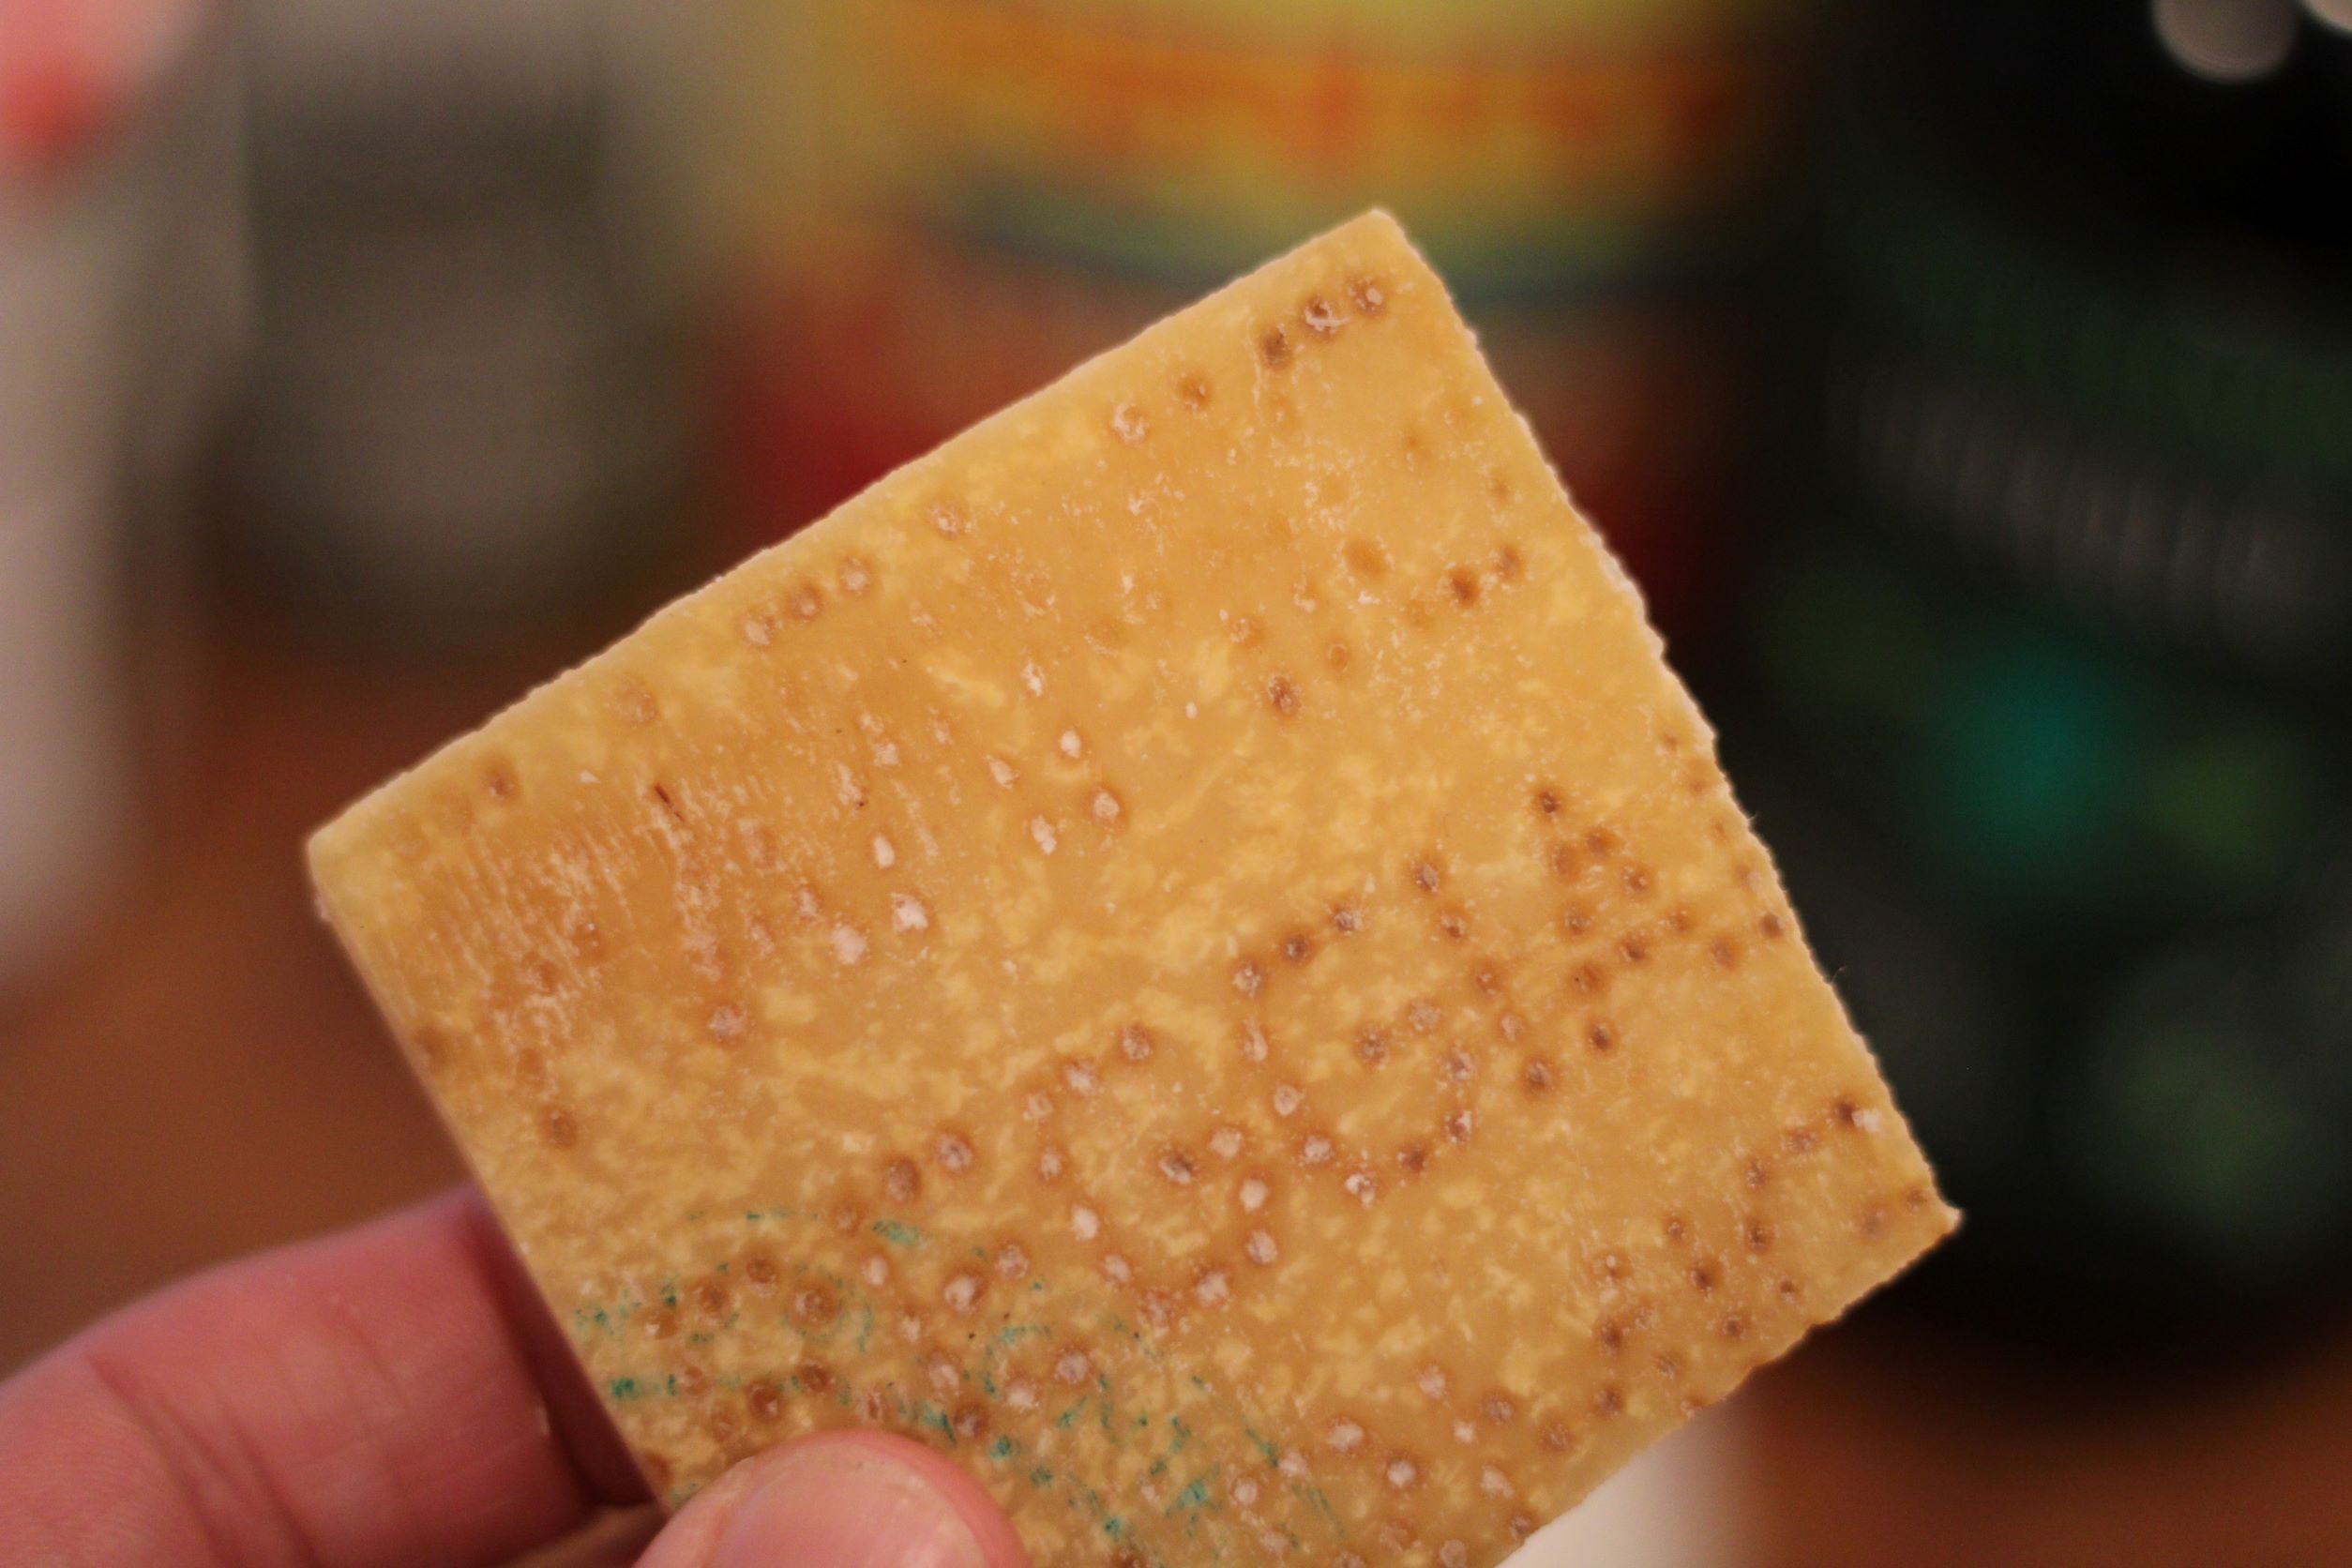 Parmigiano Reggiano block of cheese